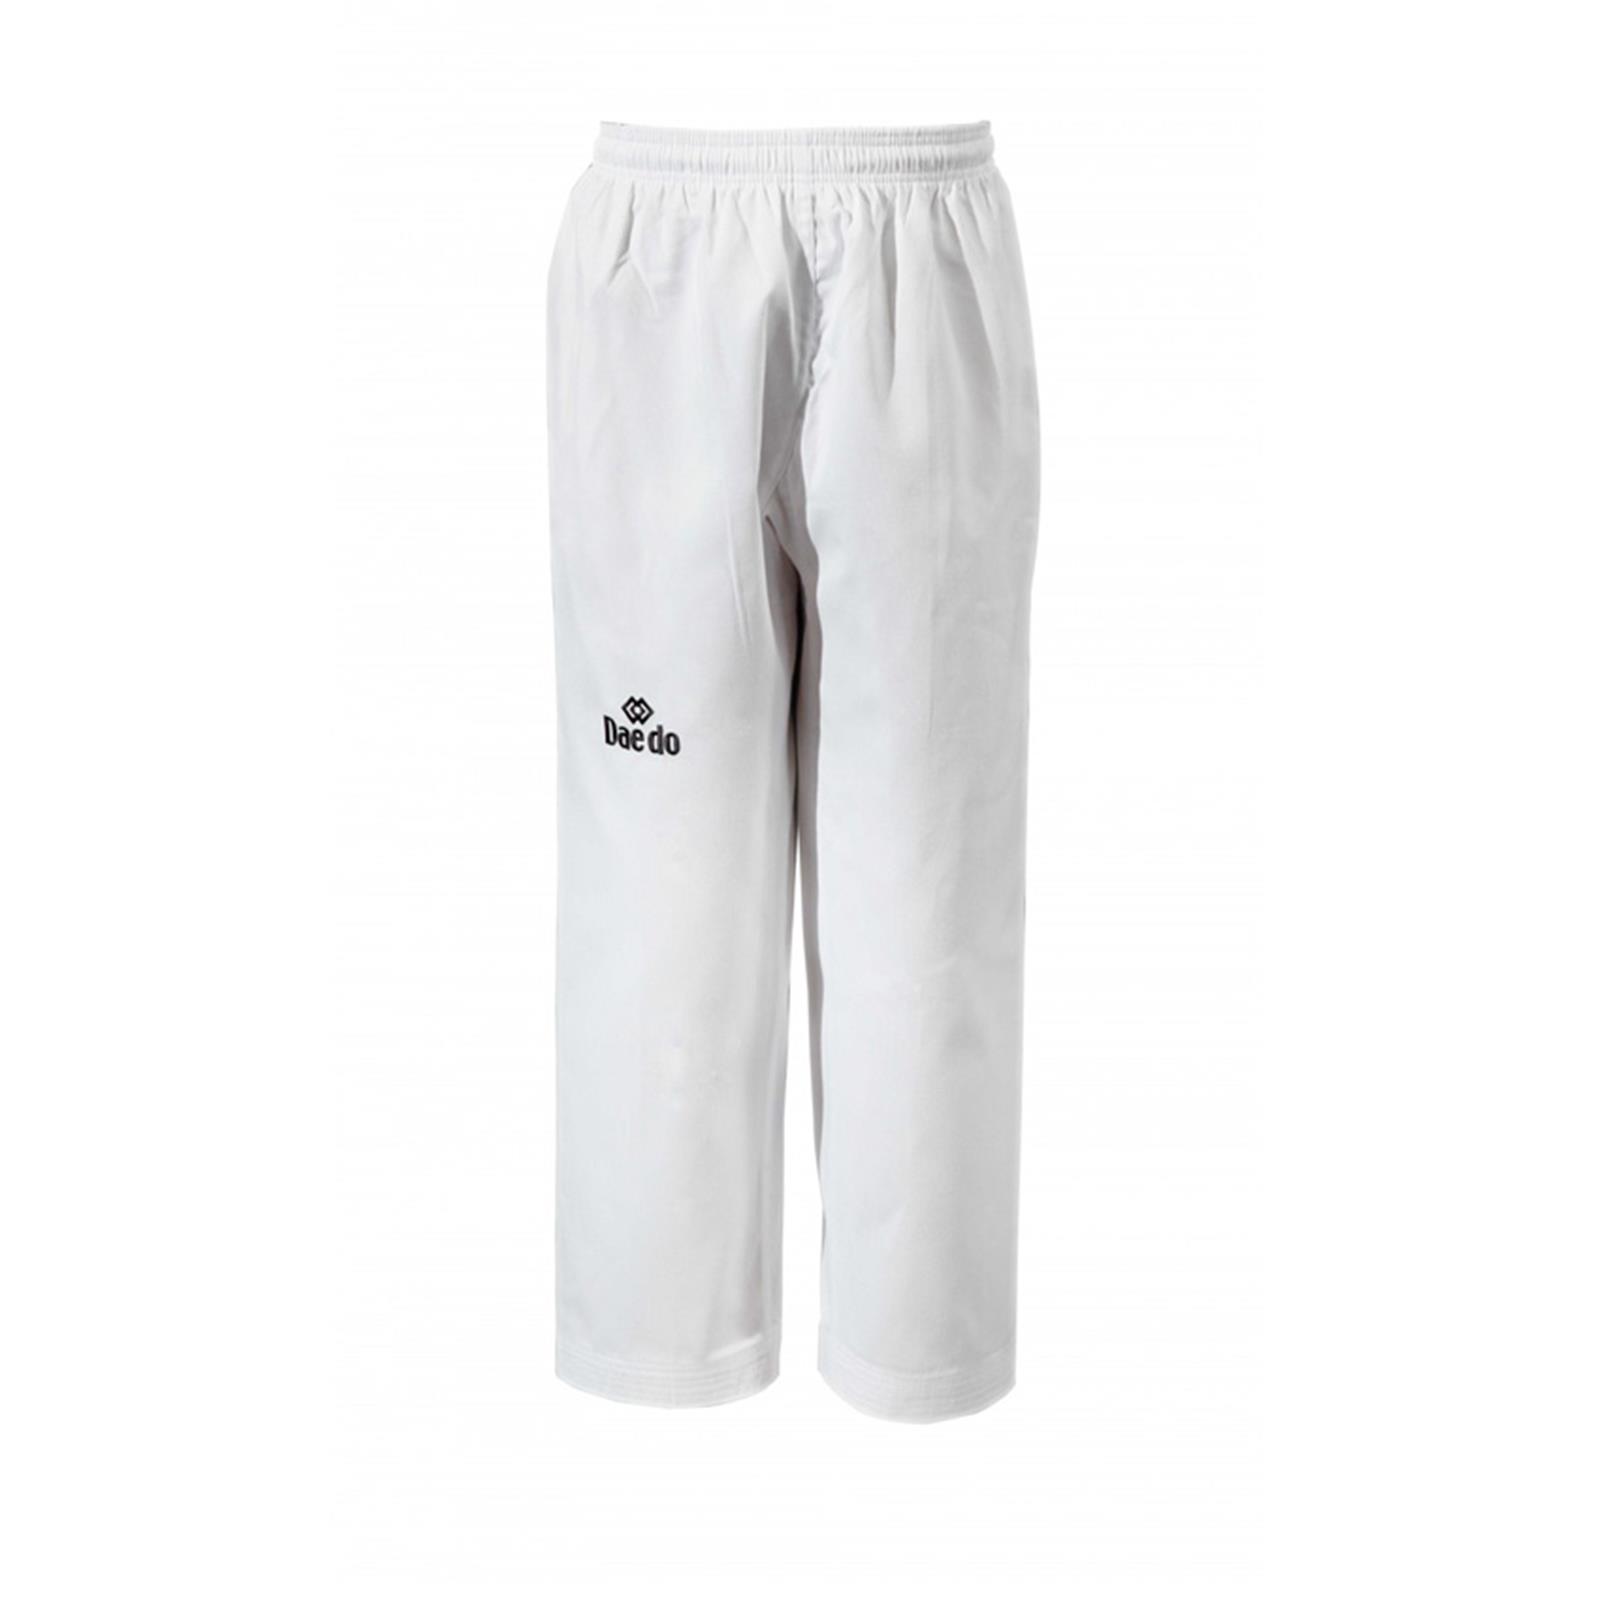 Dae Do Pantalone per Dobok Bianco (3° - 160cm - BIANCO)